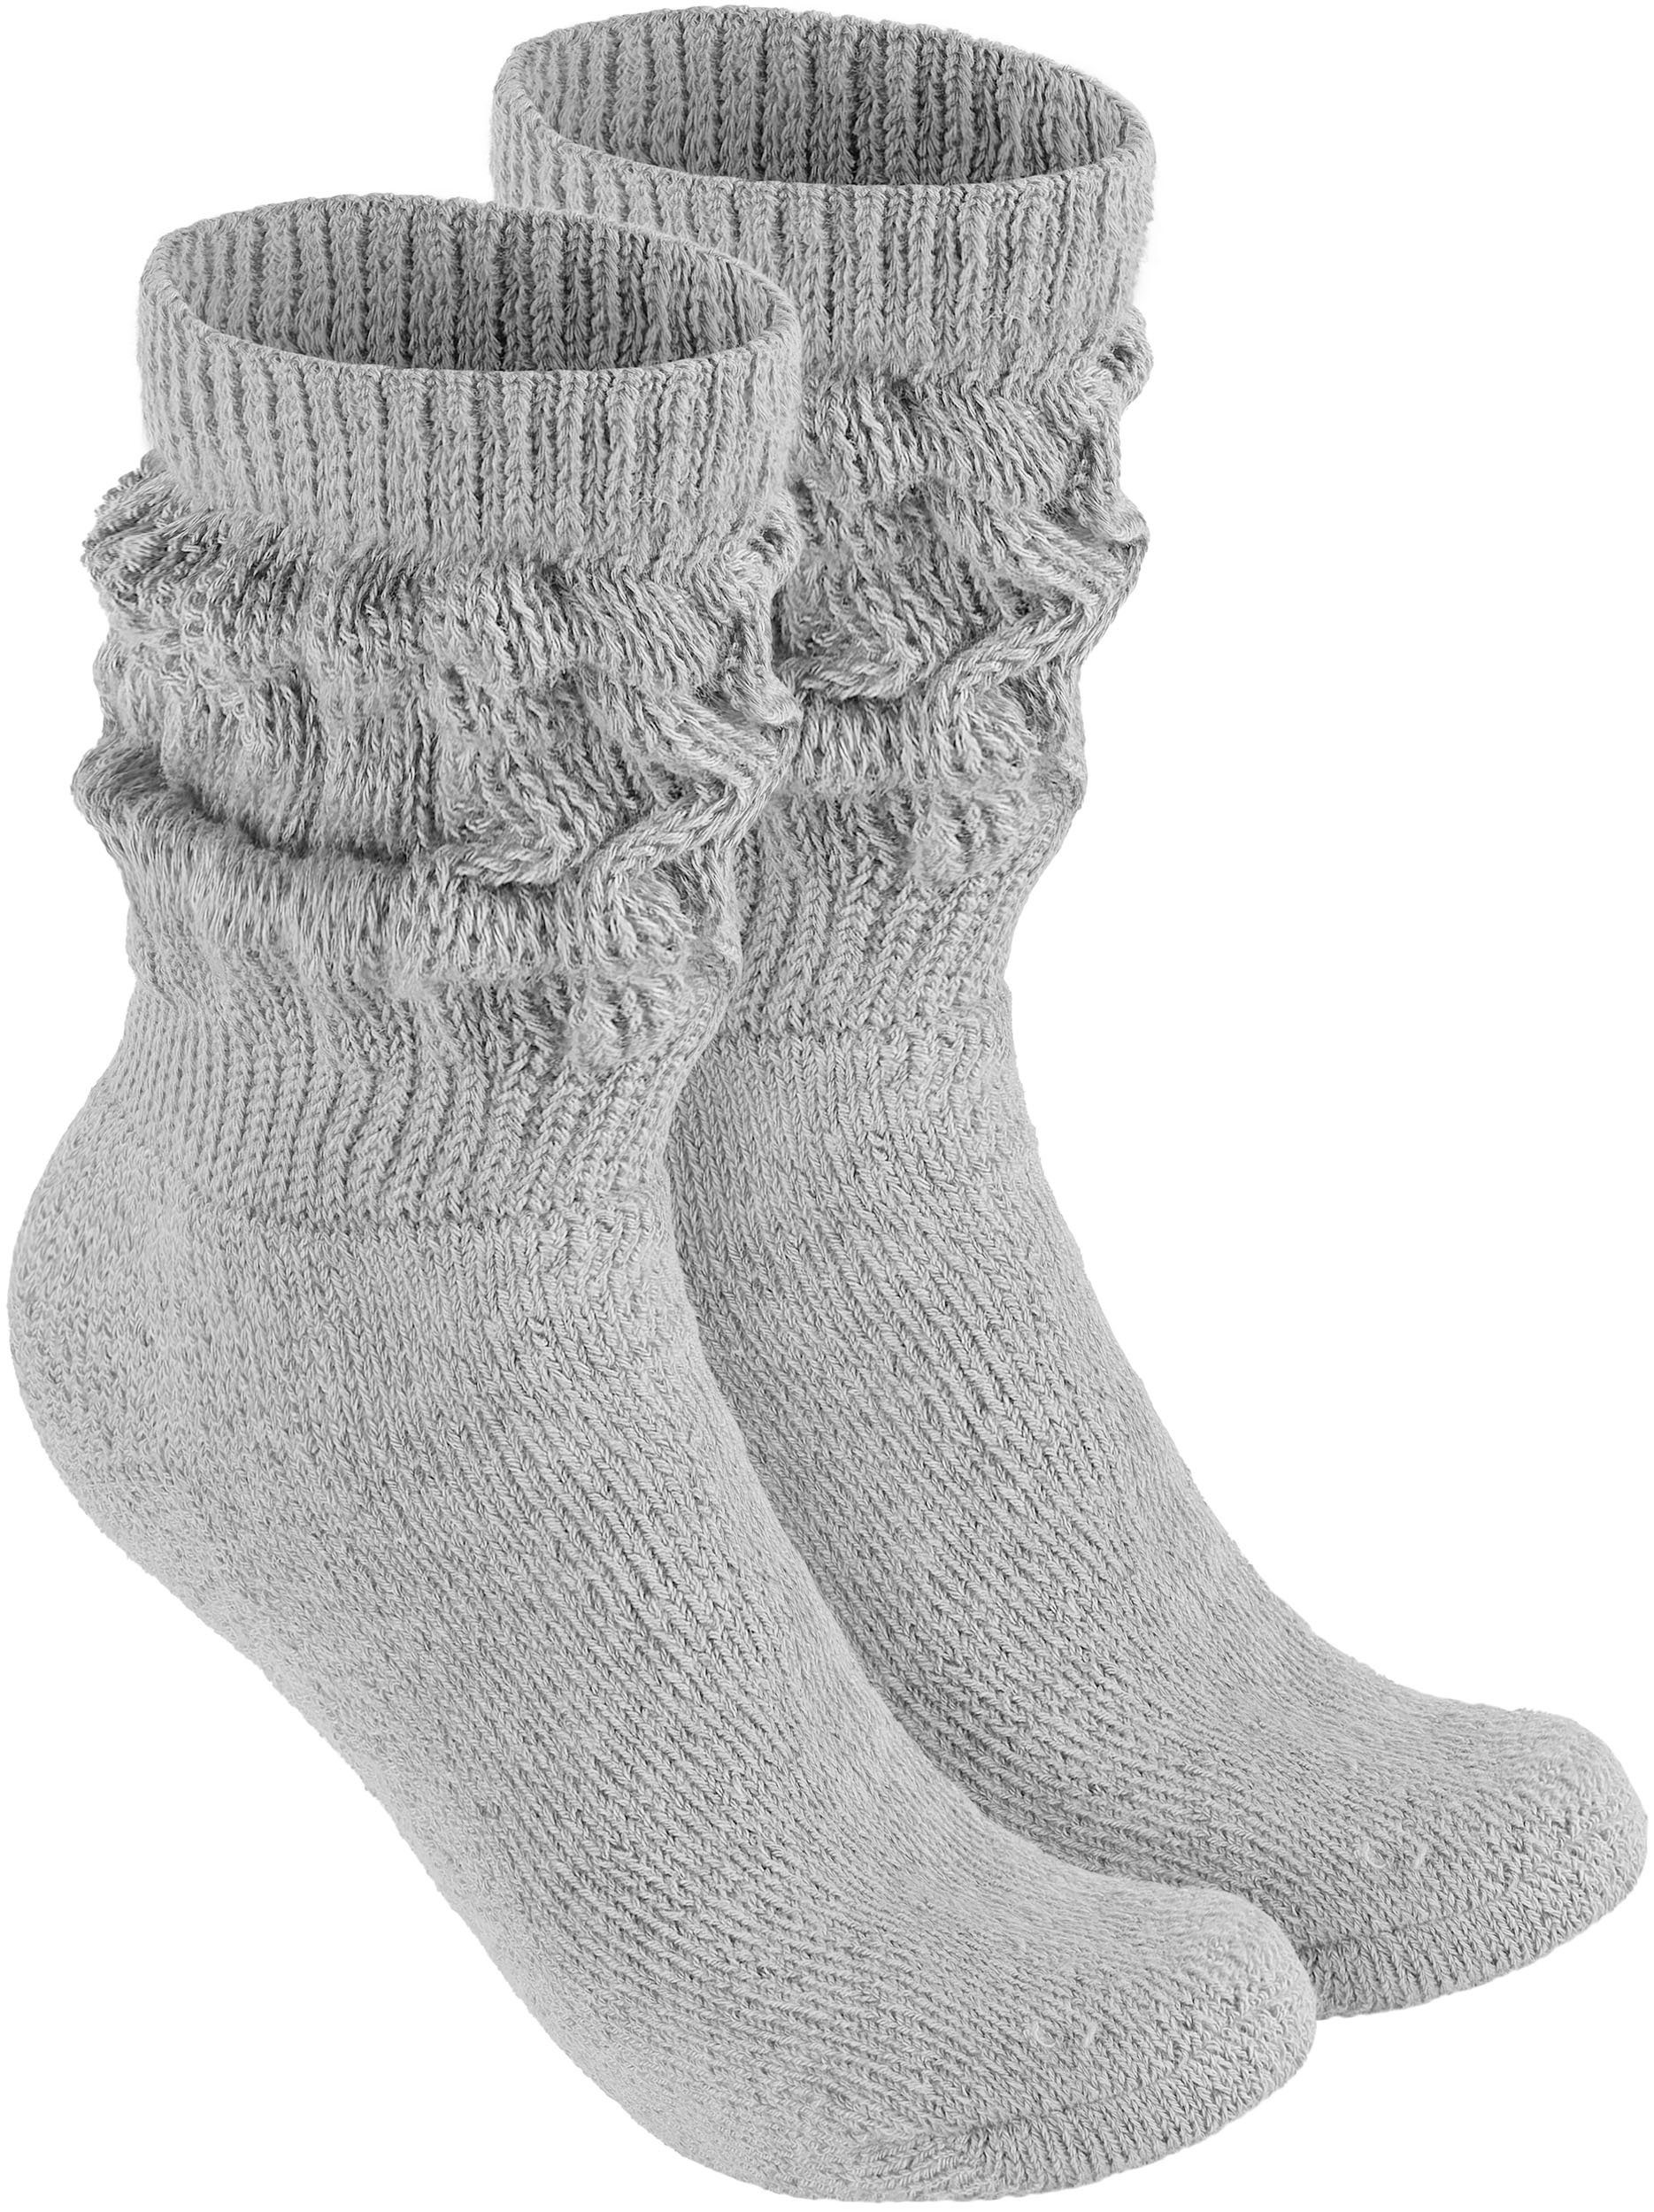 BRUBAKER Schoppersocken Slouch Socken - Damen Fitnesssocken (80s Style, 1- Paar, Baumwolle) Knit Sportsocken für Fitness, Yoga, Workout, Gymnastik und  Wellness